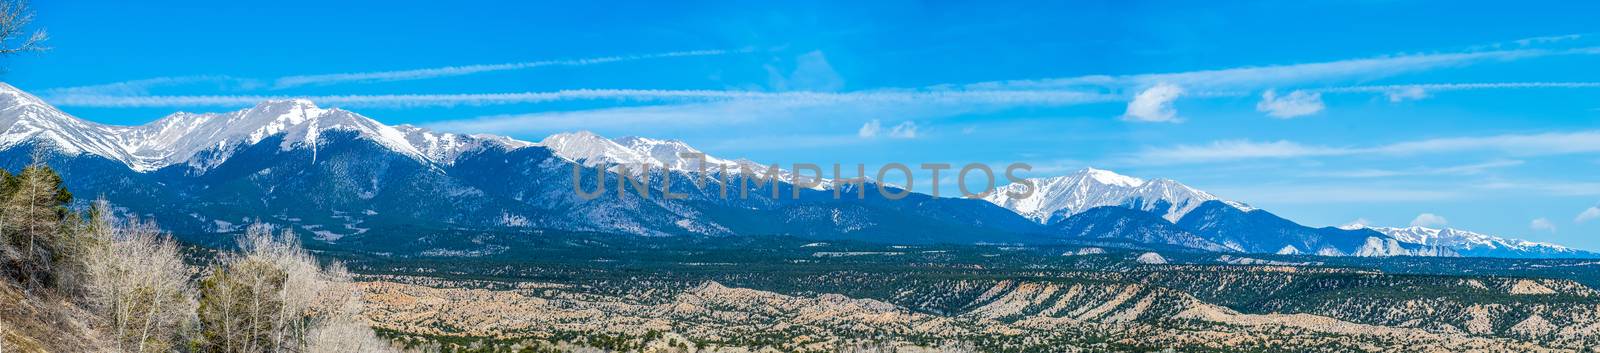 colorado roky mountains vista views by digidreamgrafix